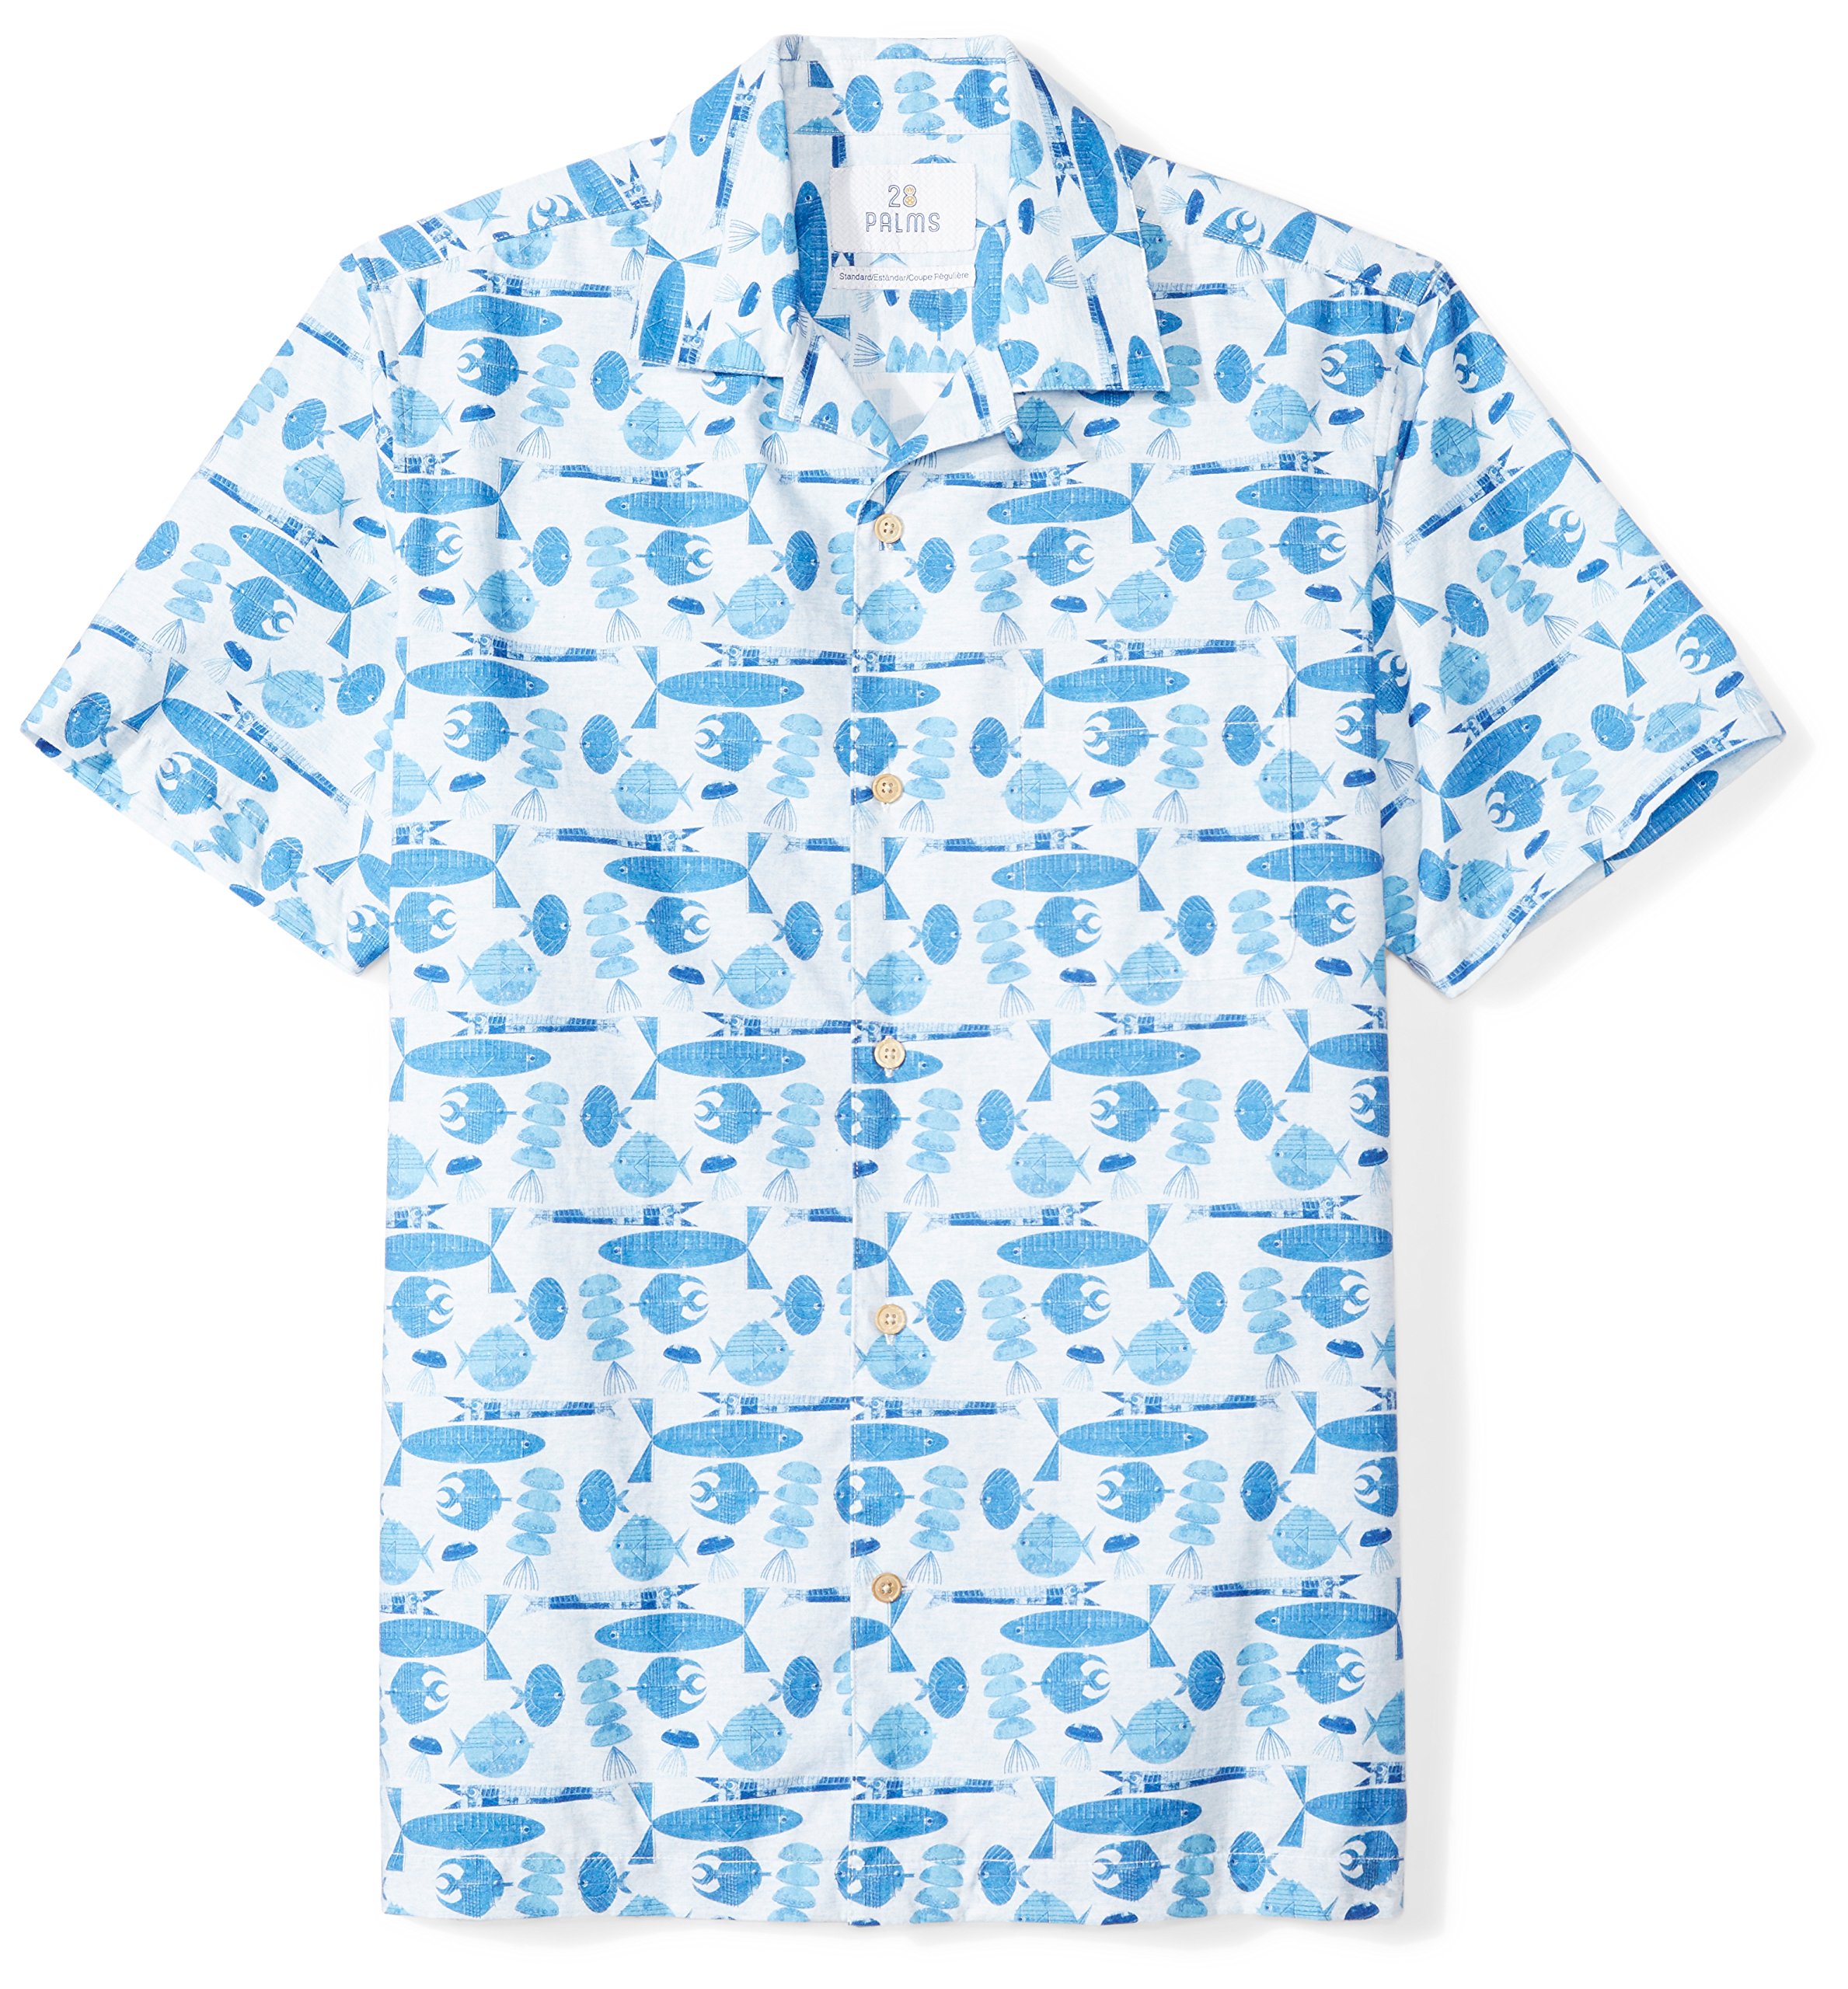 28 Palms Men's Standard-Fit 100% Cotton Tropical Vacation Shirt